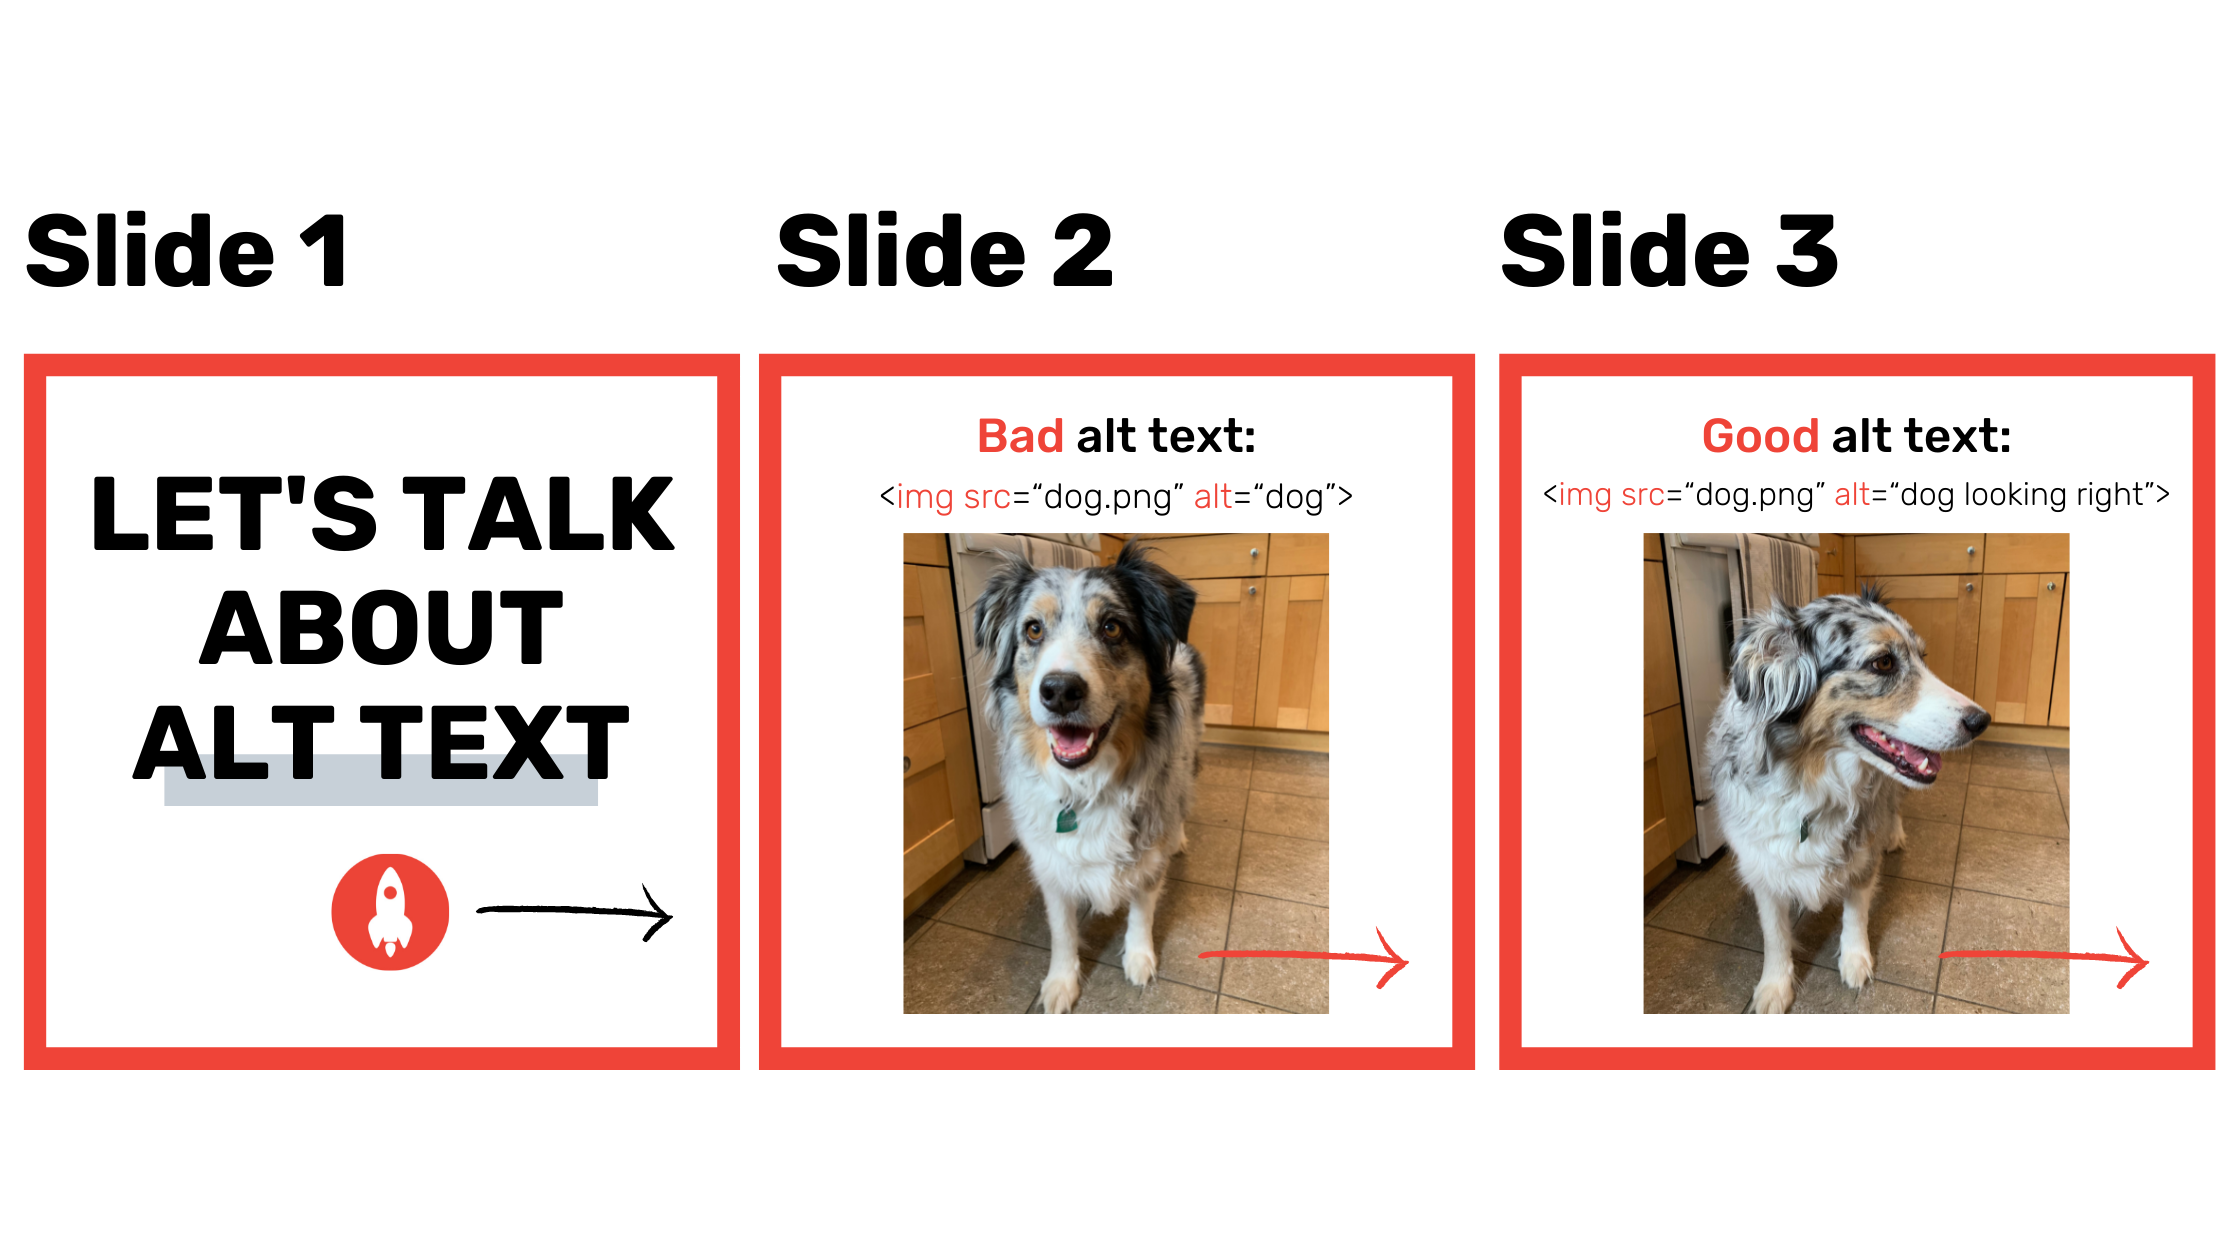 Three slides that show three dog images